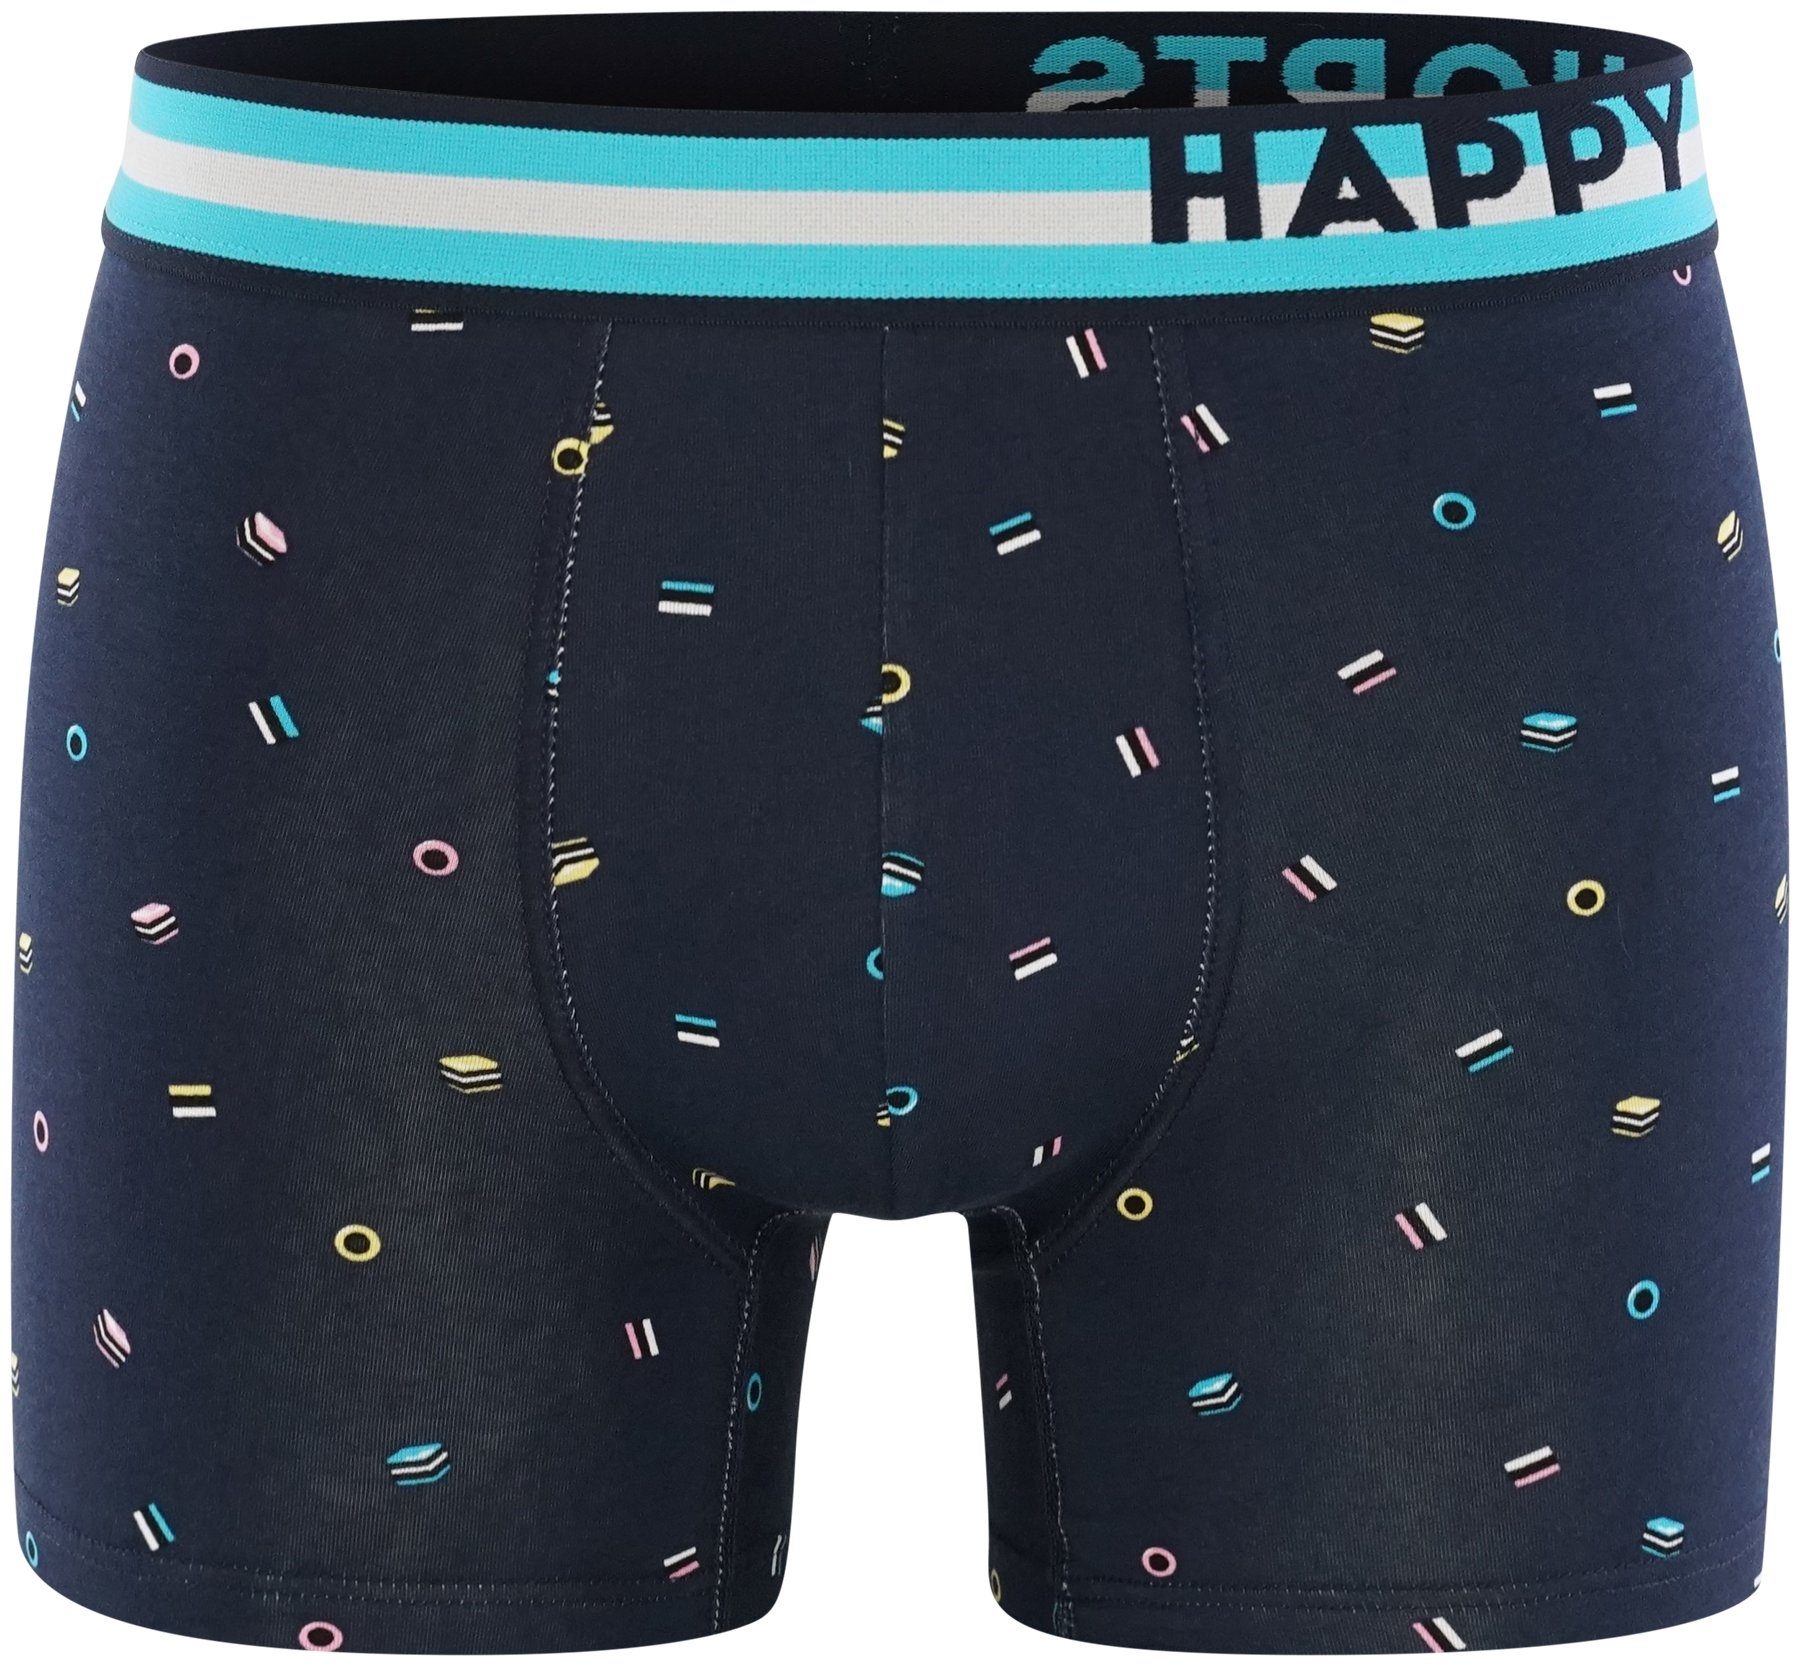 HAPPY Trunks 2-Pack (2-St) SHORTS Licorice Retro Pants